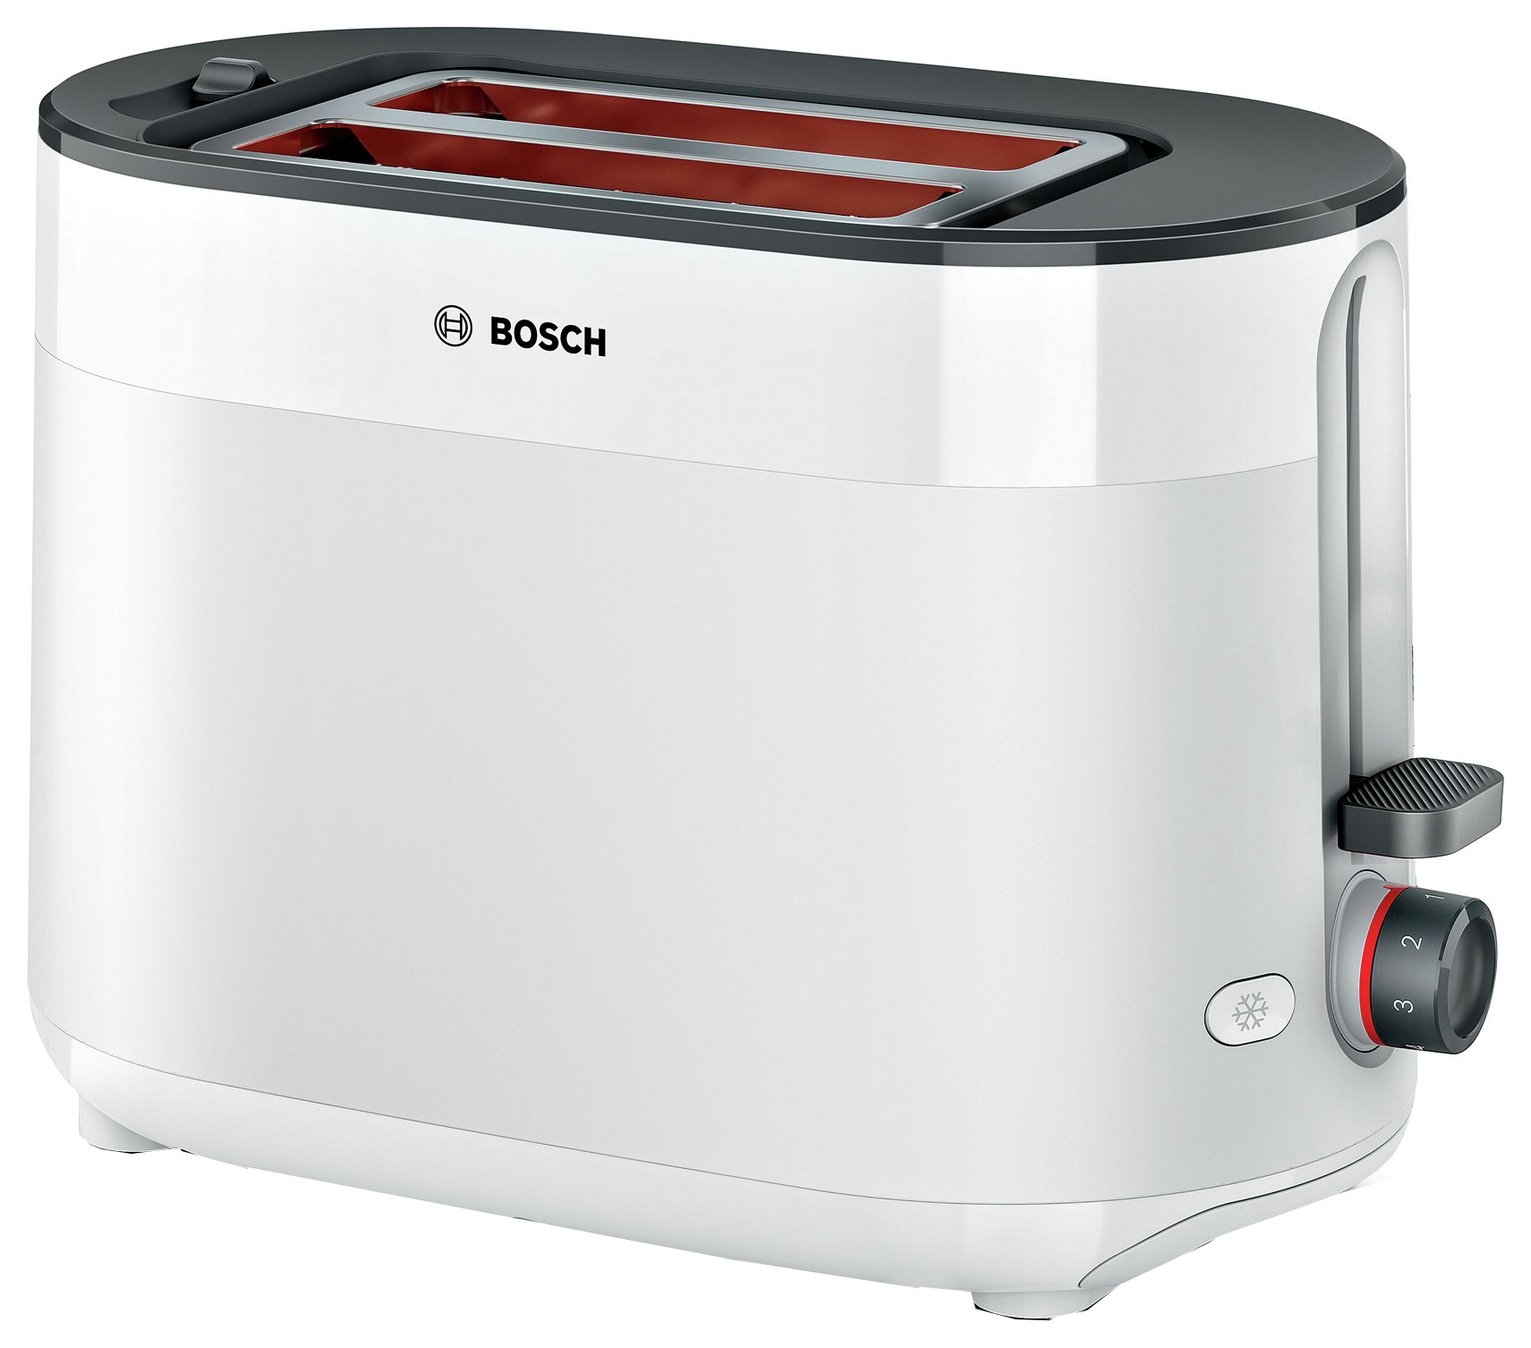 Bosch TAT2M121GB MyMoment Delight 2 Slice Toaster - White